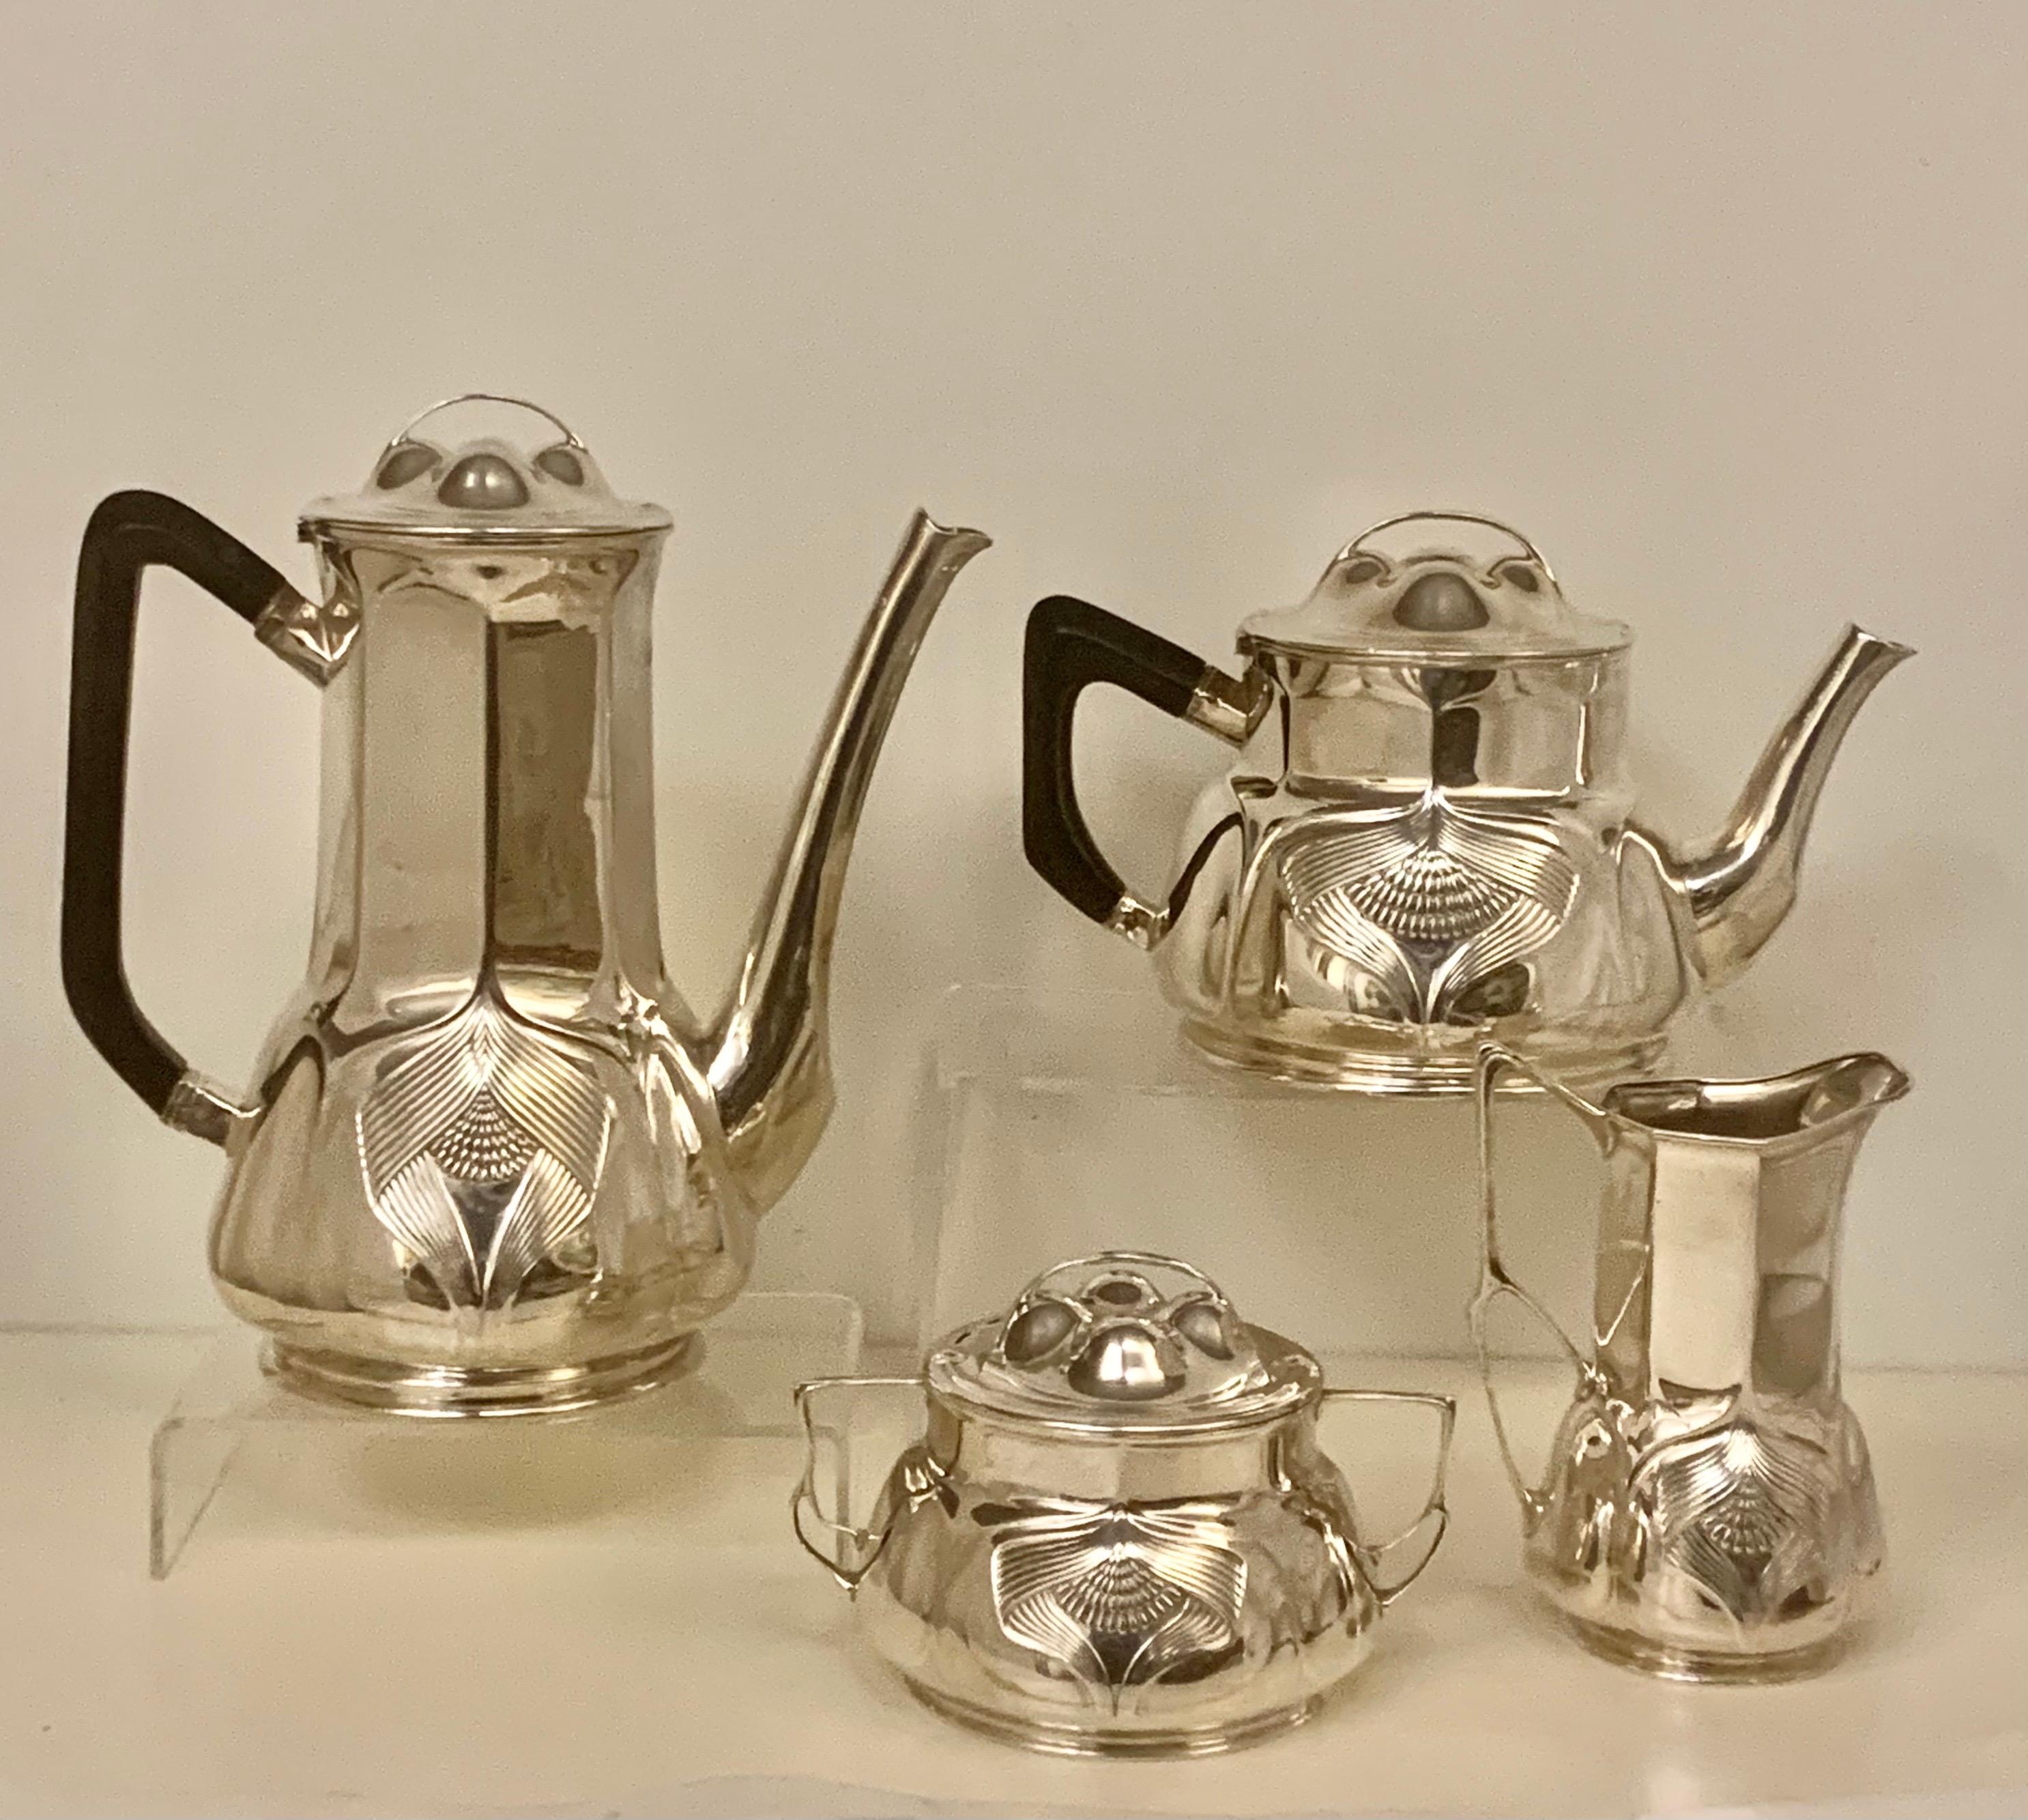 Orivit Jugendstil Sterling Silver Four-Piece Tea and Coffee Service For Sale 6